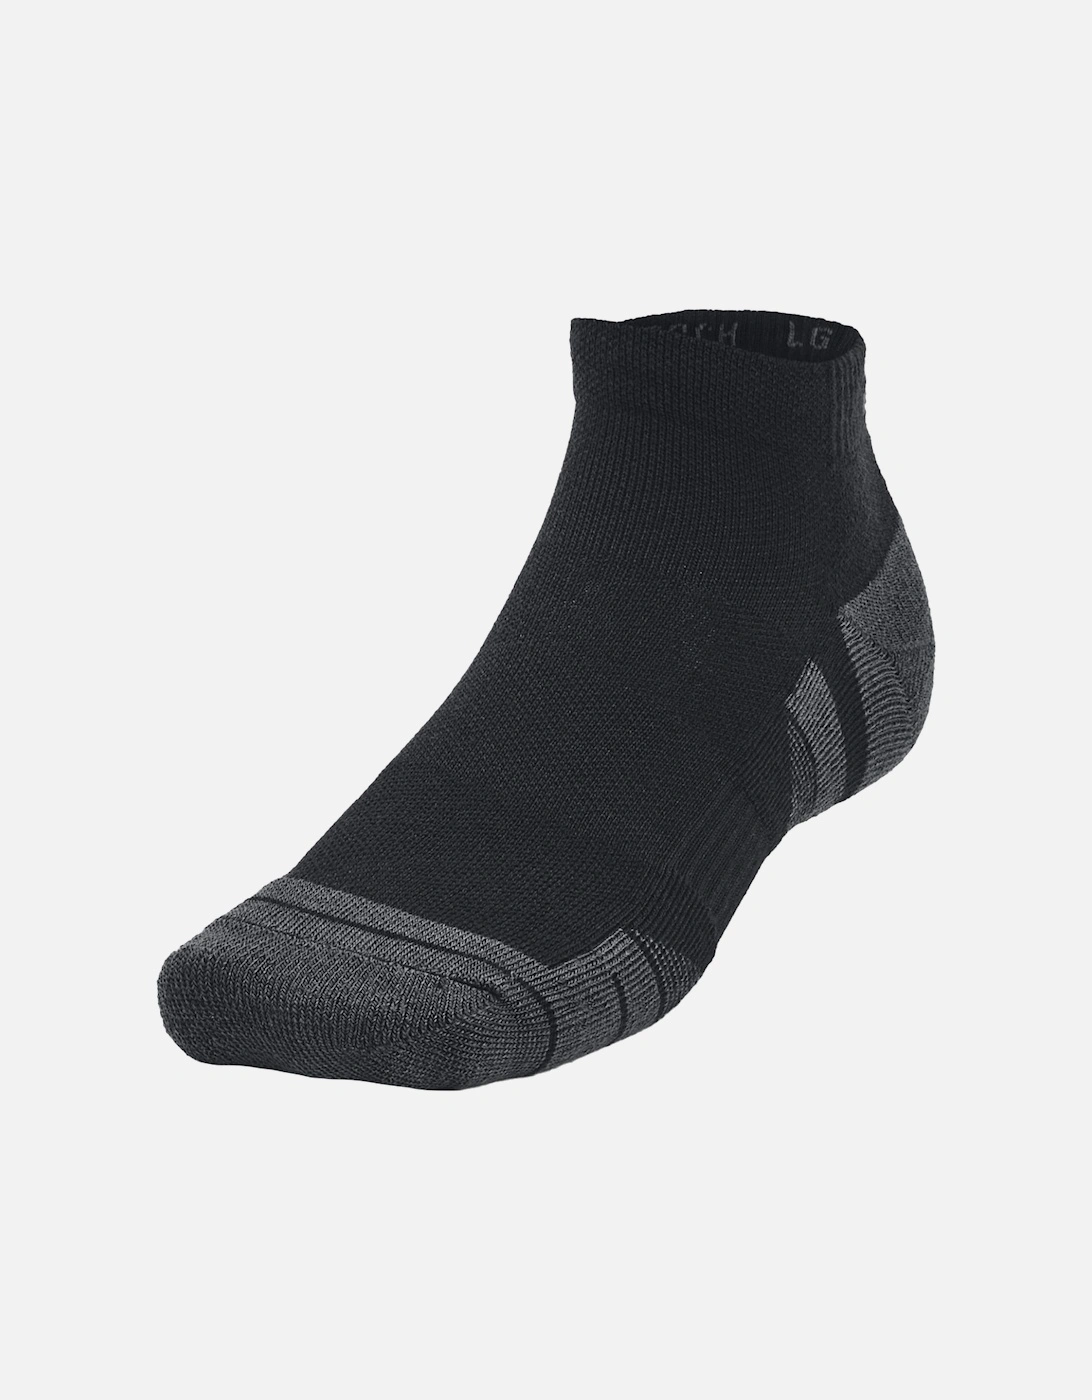 Unisex Adult Performance Tech Socks (Pack of 3)